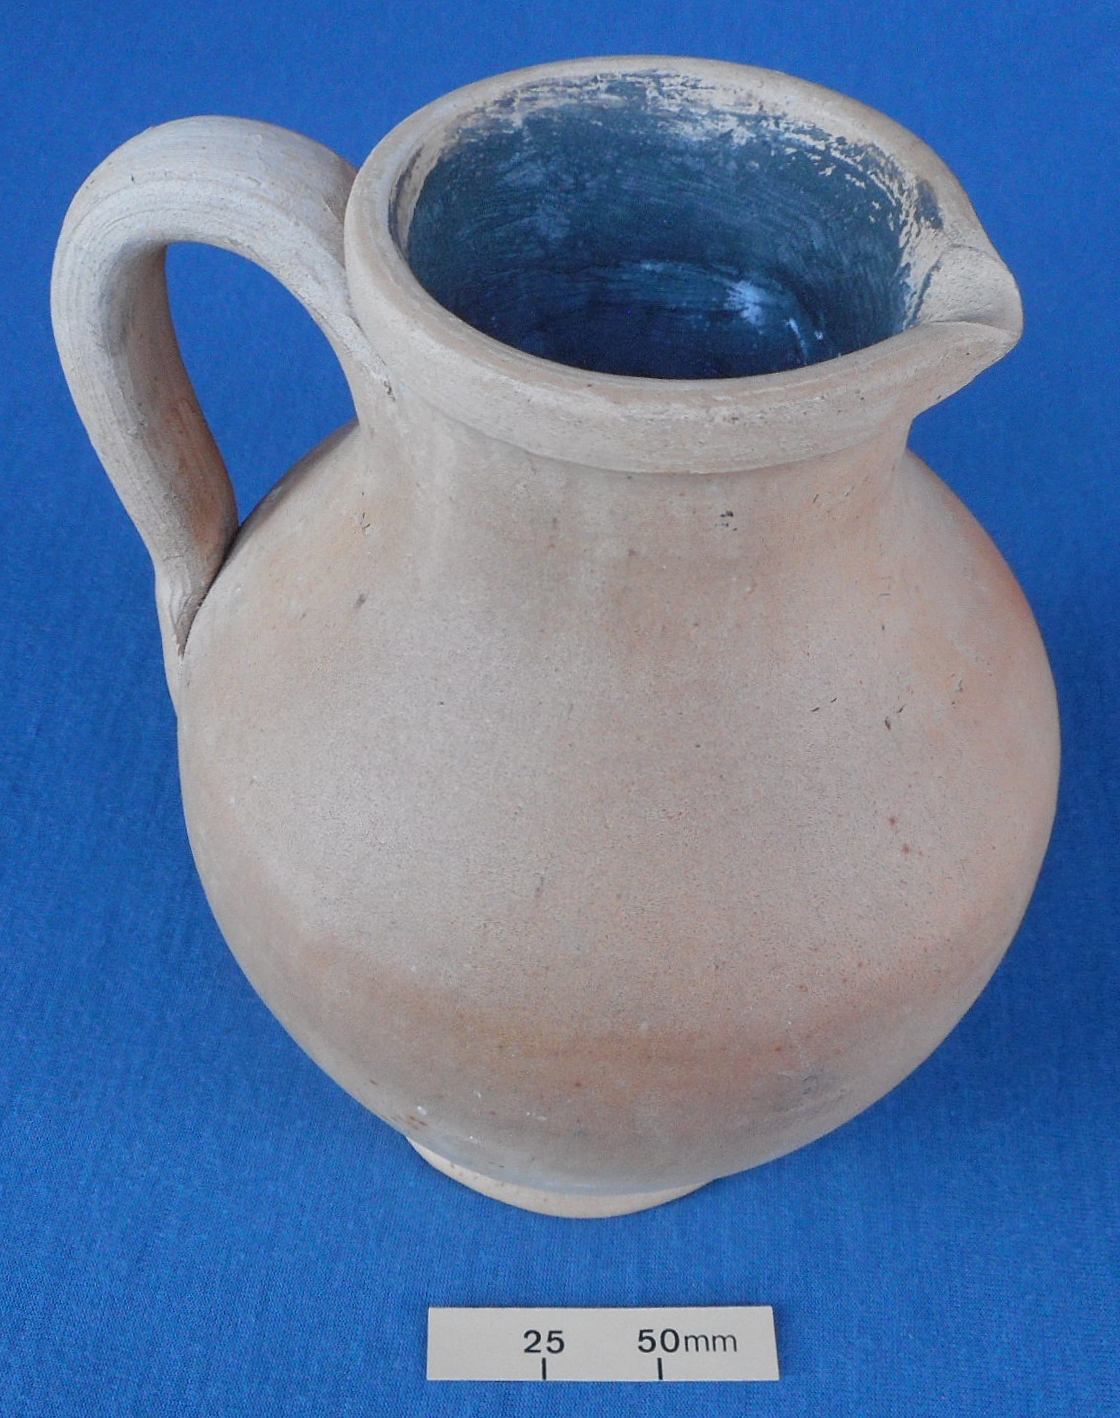 ‘Water from India’ jug owned by Kalanag